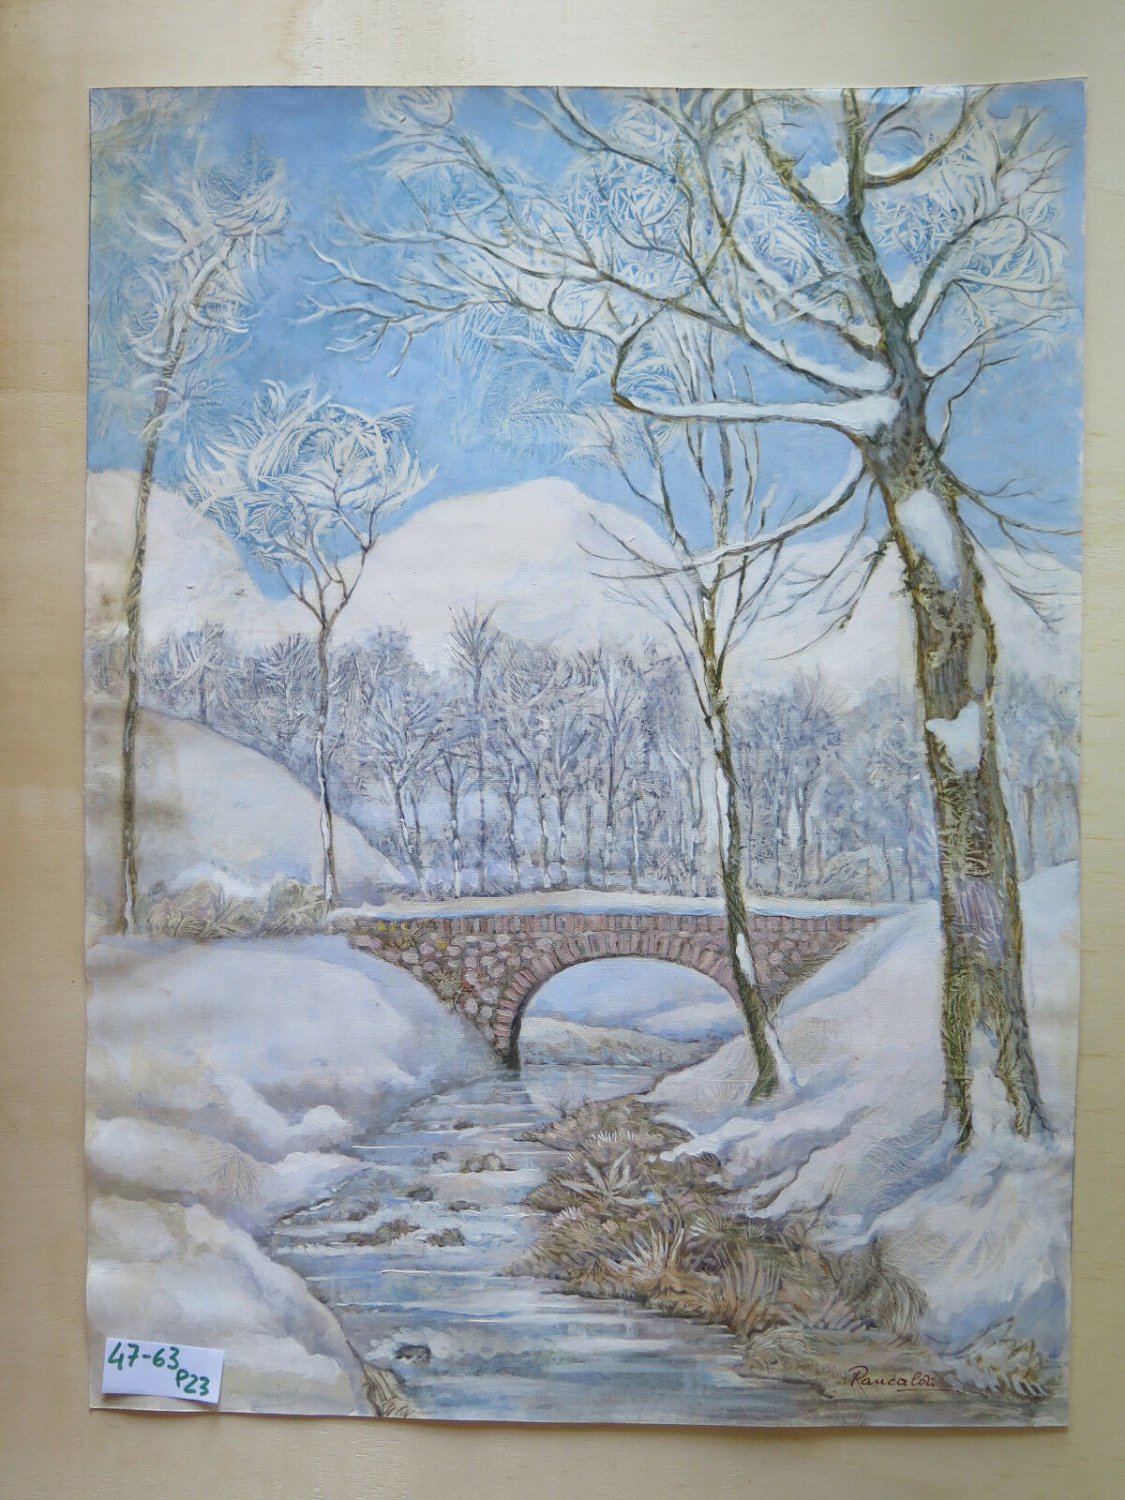 Painting Vintage oil And Watercolour landscape Winter Signed Pancaldi P23